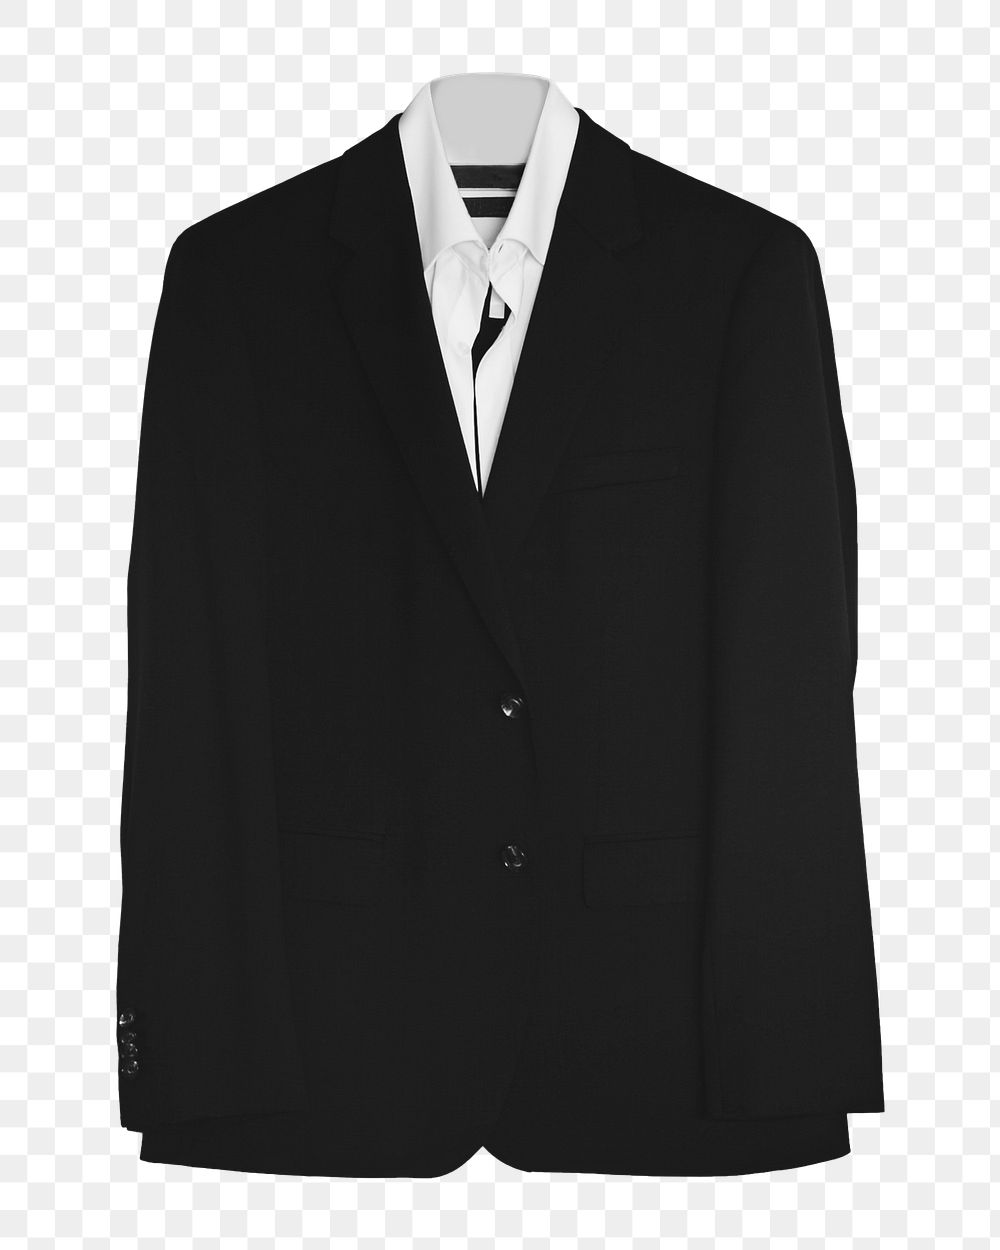 Black suit png sticker, transparent background